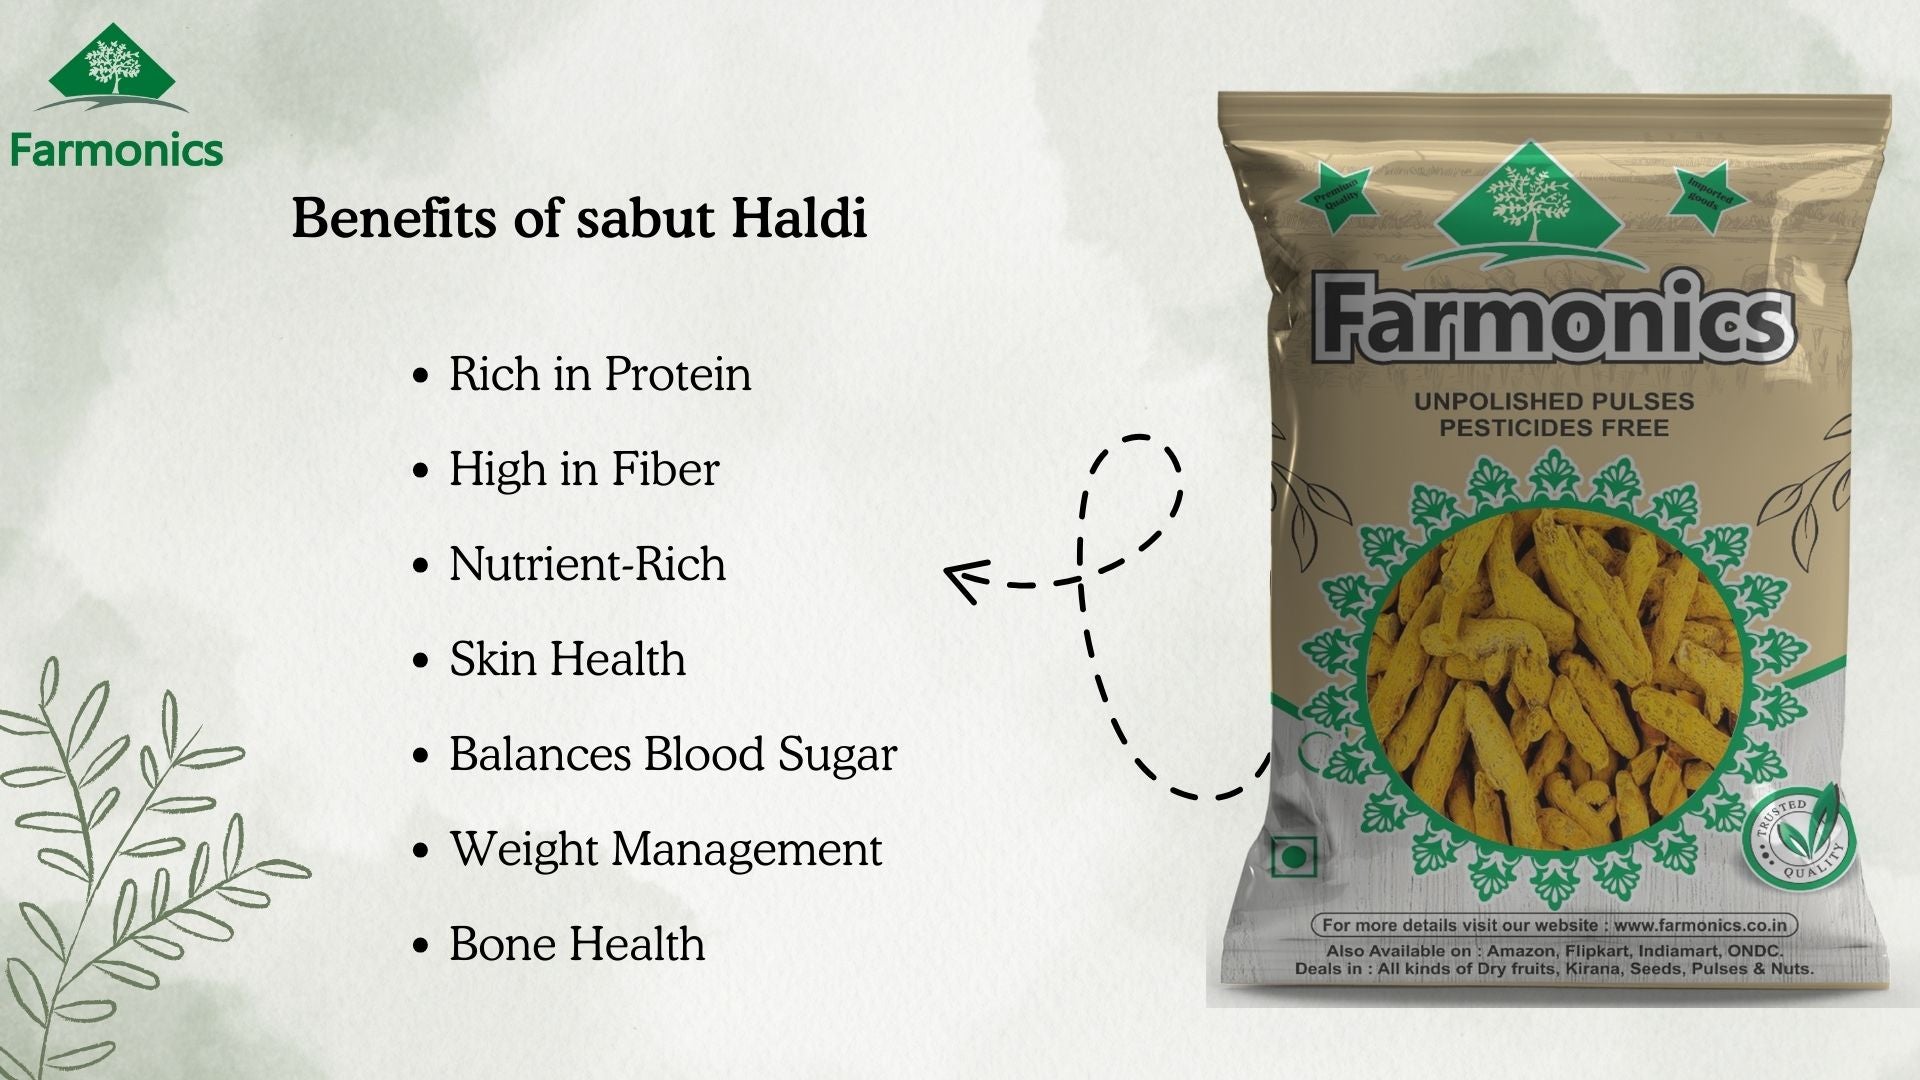 Benefits of Farmonics unadultered sabut haldi 